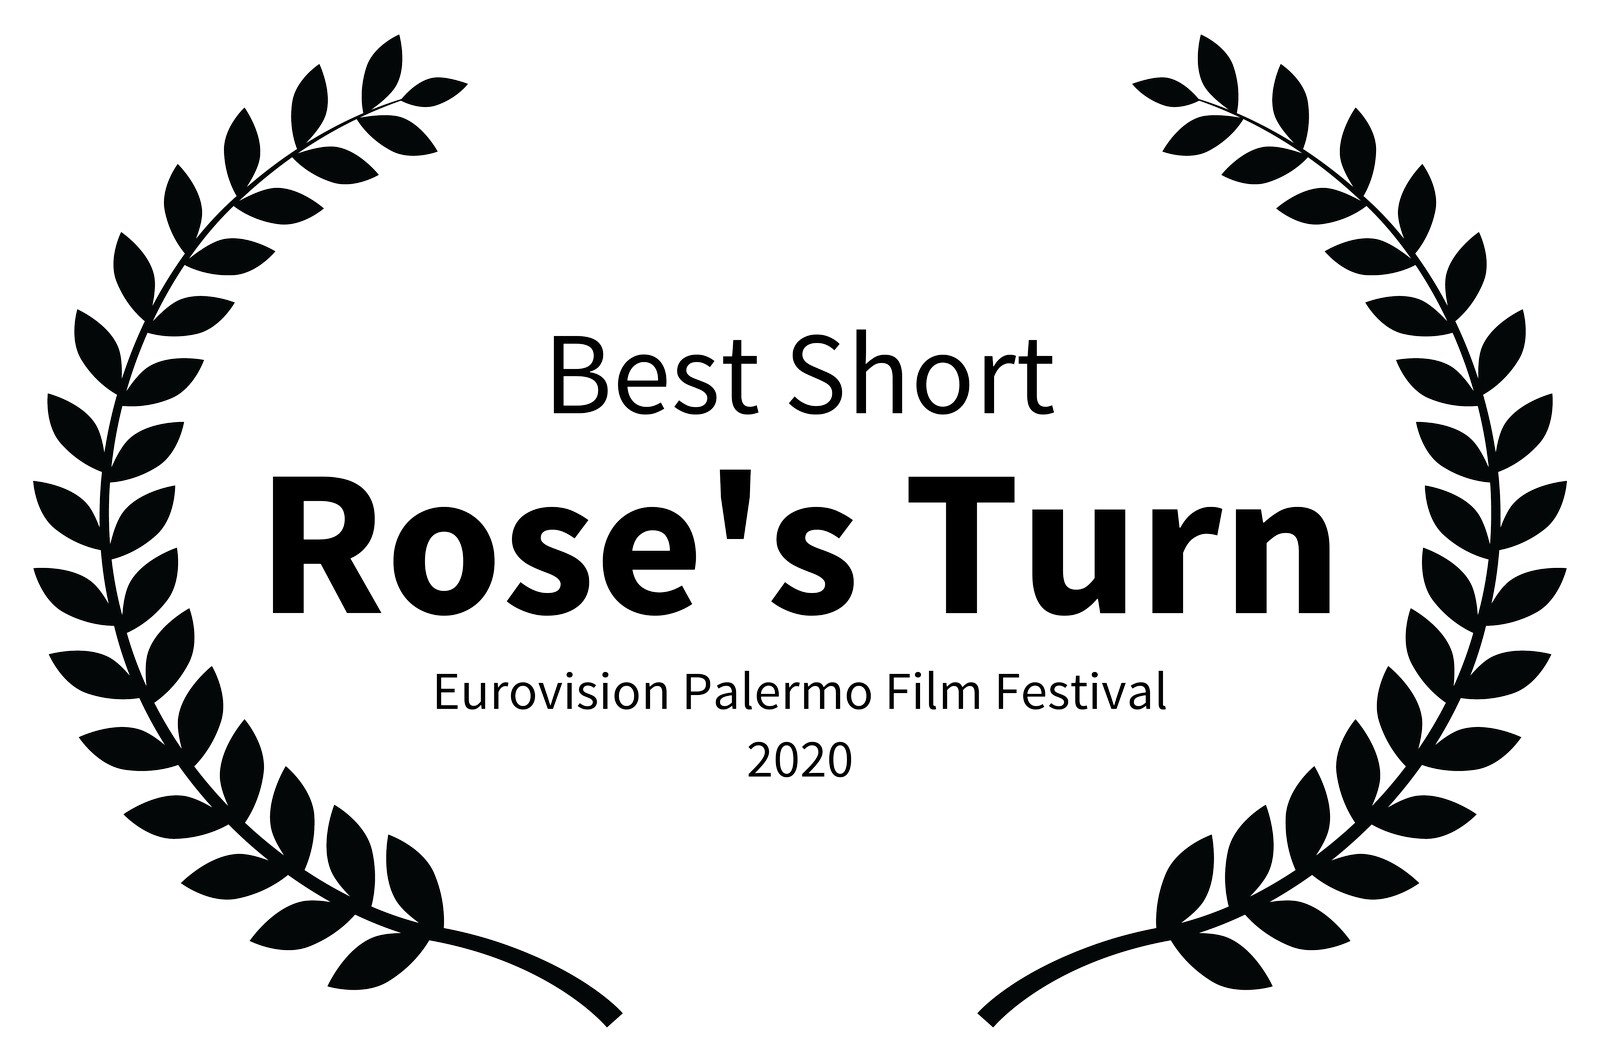 BestShort-RosesTurn-EurovisionPalermoFilmFestival2020.jpg